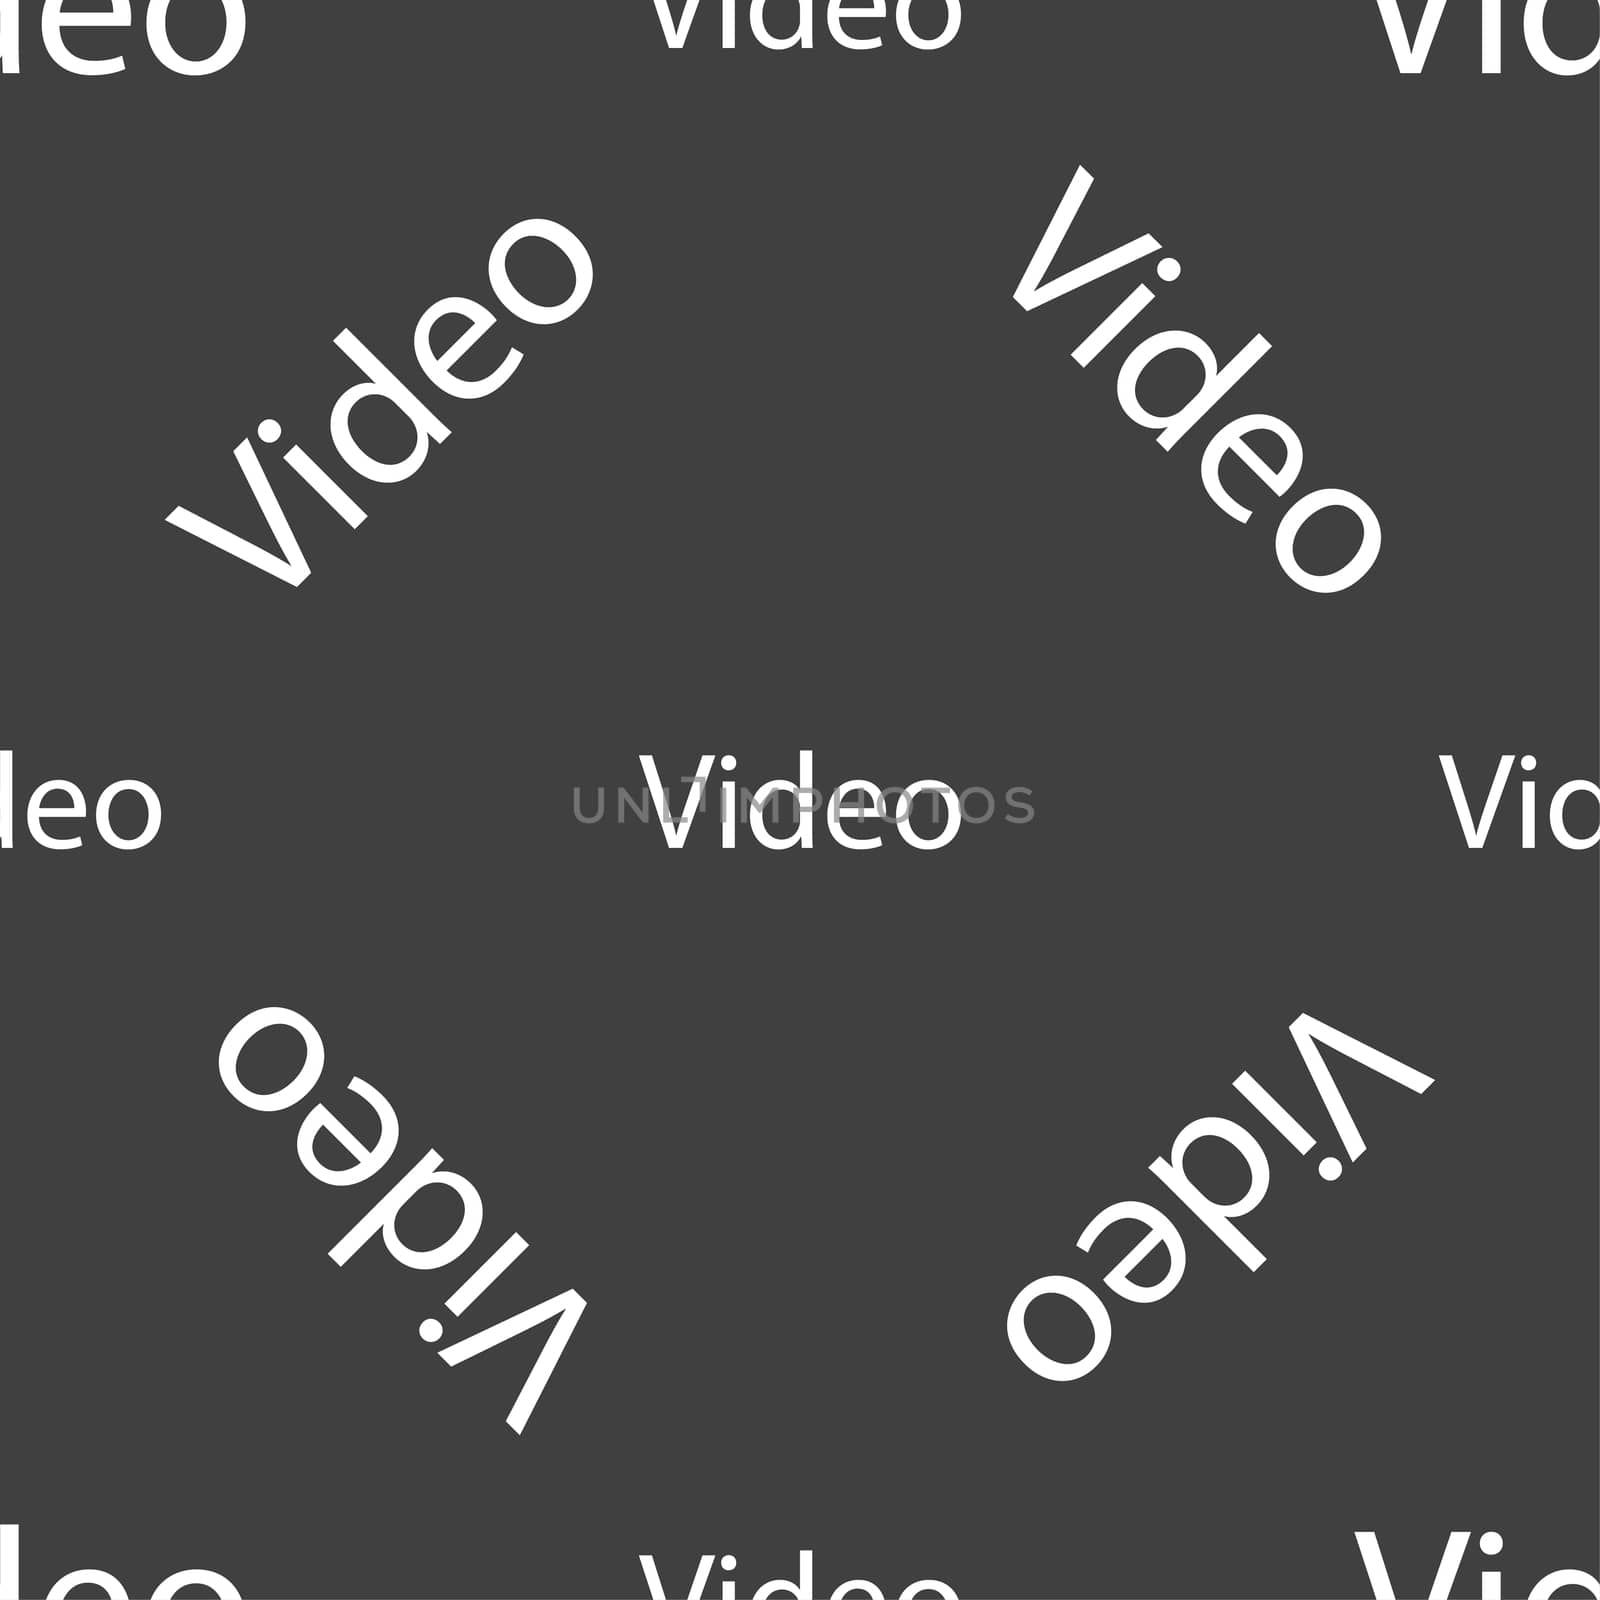 Play video sign icon. Player navigation symbol. Seamless pattern on a gray background.  by serhii_lohvyniuk